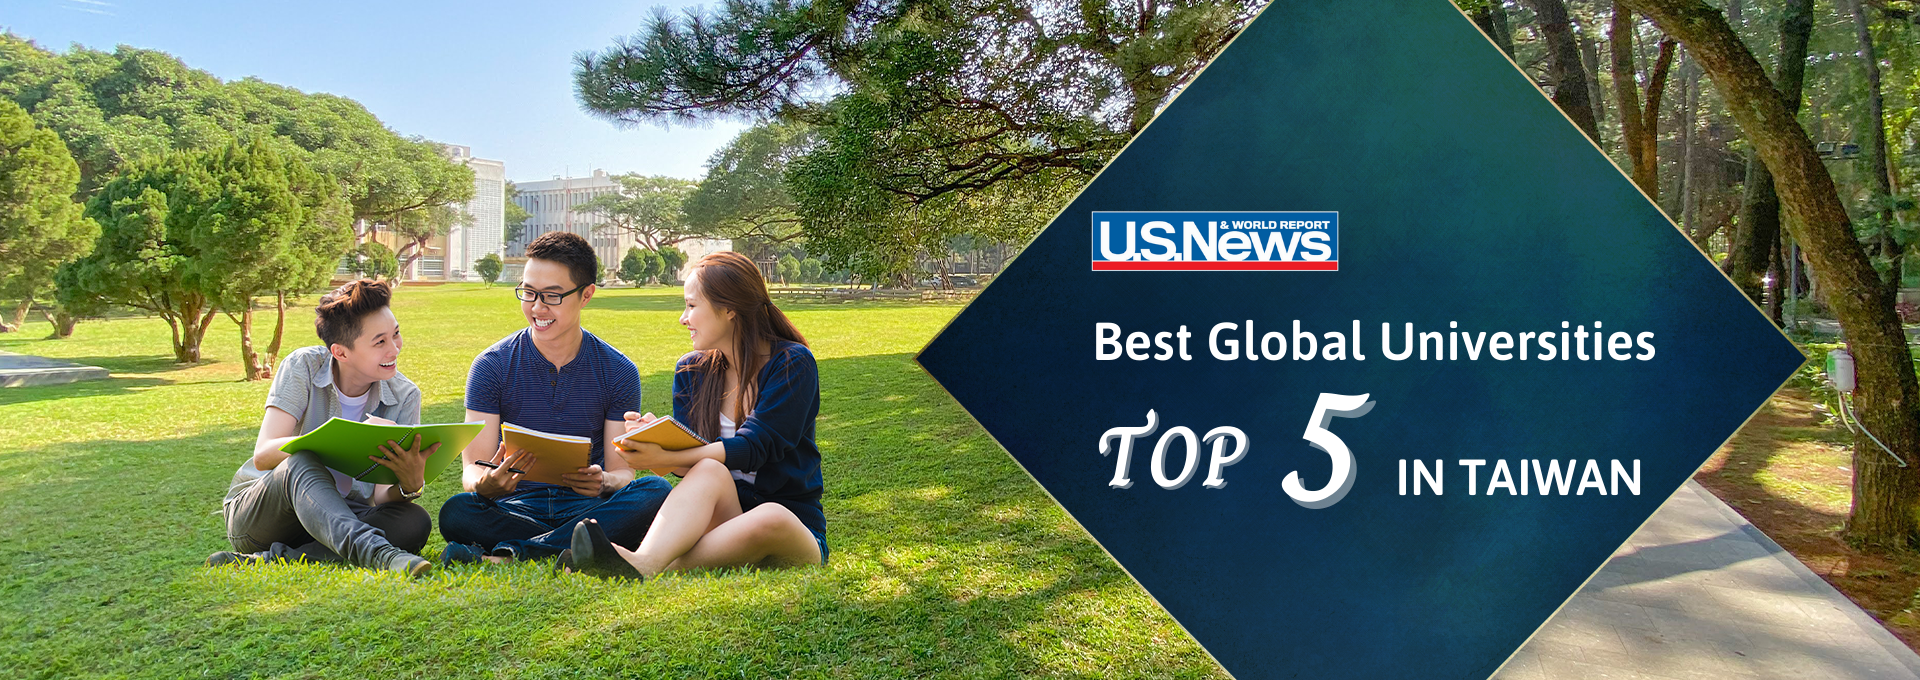 U.S. News Best Global Universities